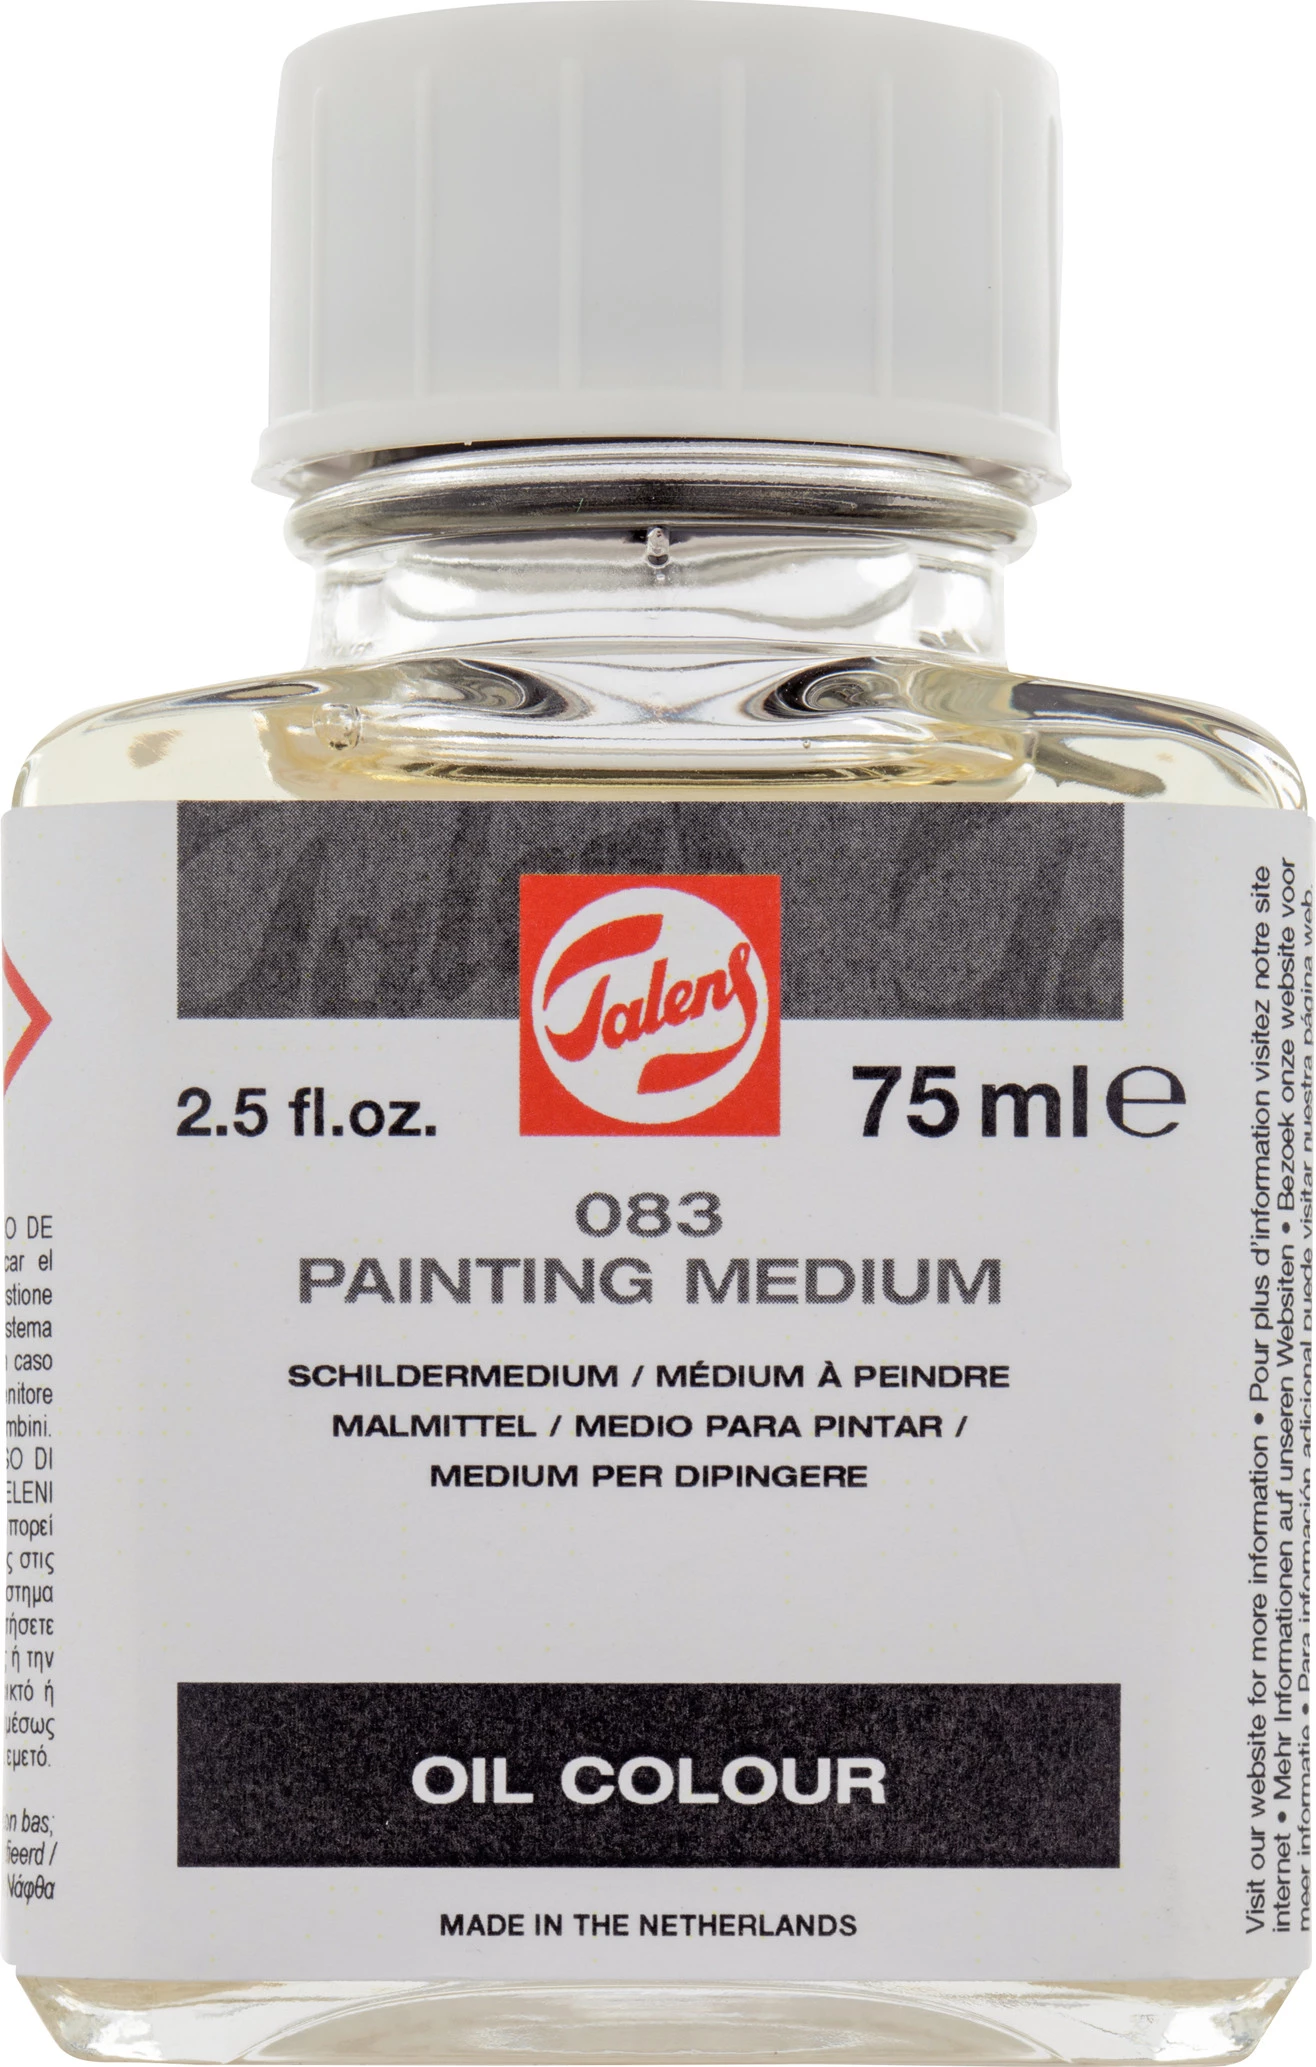 TALENS Painting medium 75 ml  - medium do farb olejnych 083